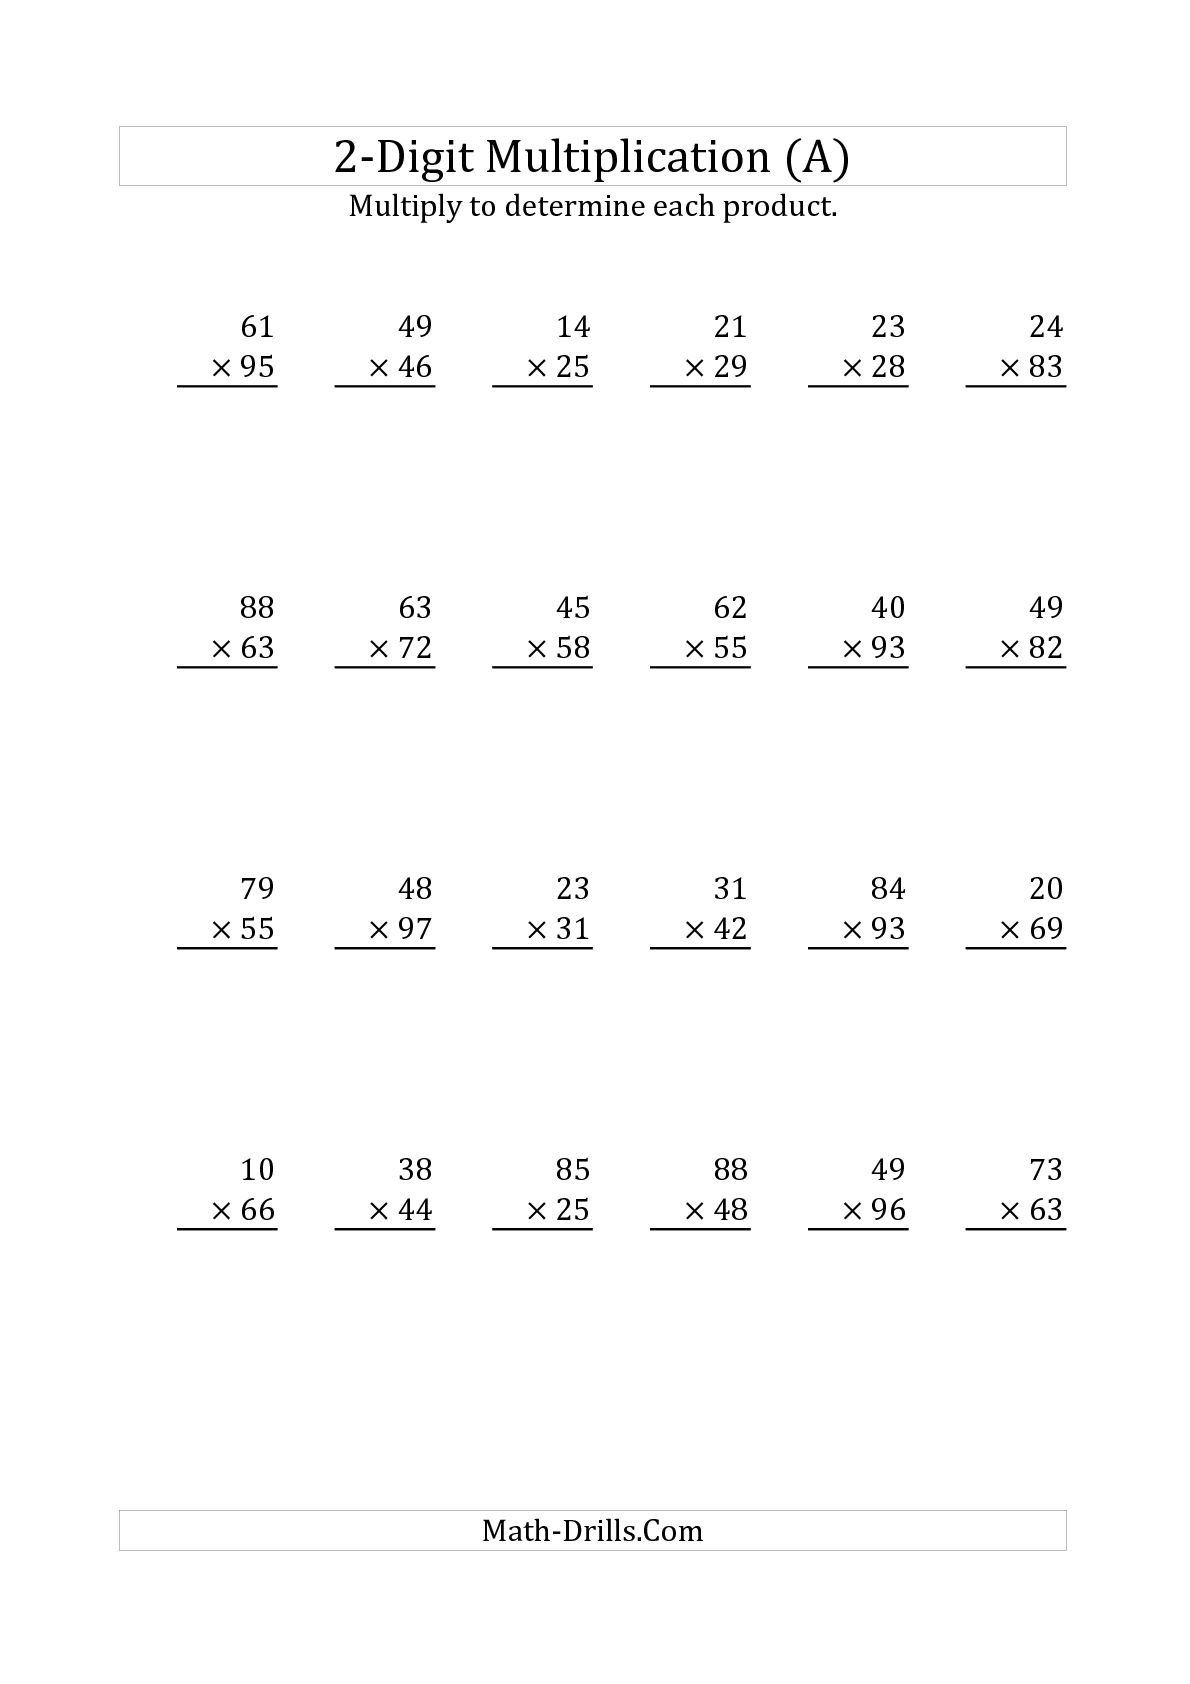 Multiplication Worksheets by 2 Digit Numbers Image